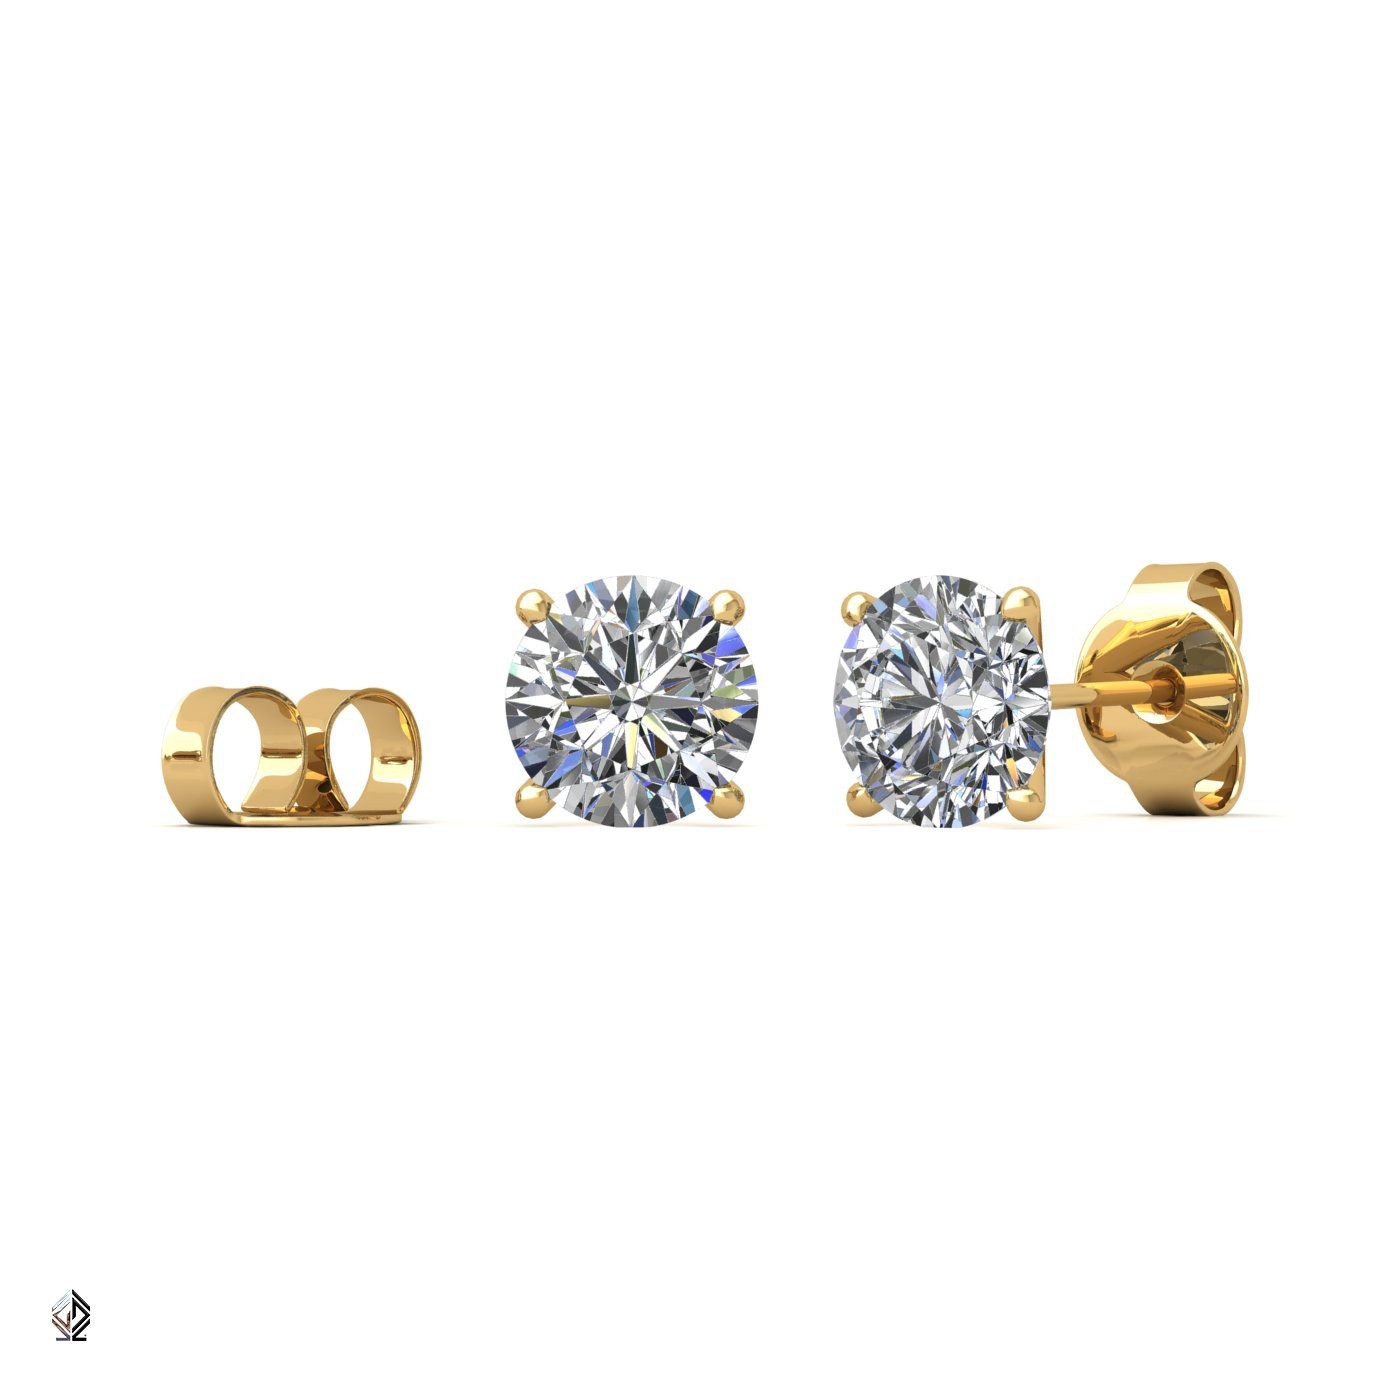 18k yellow gold 0,5 ct 4 prongs round cut classic diamond earring studs